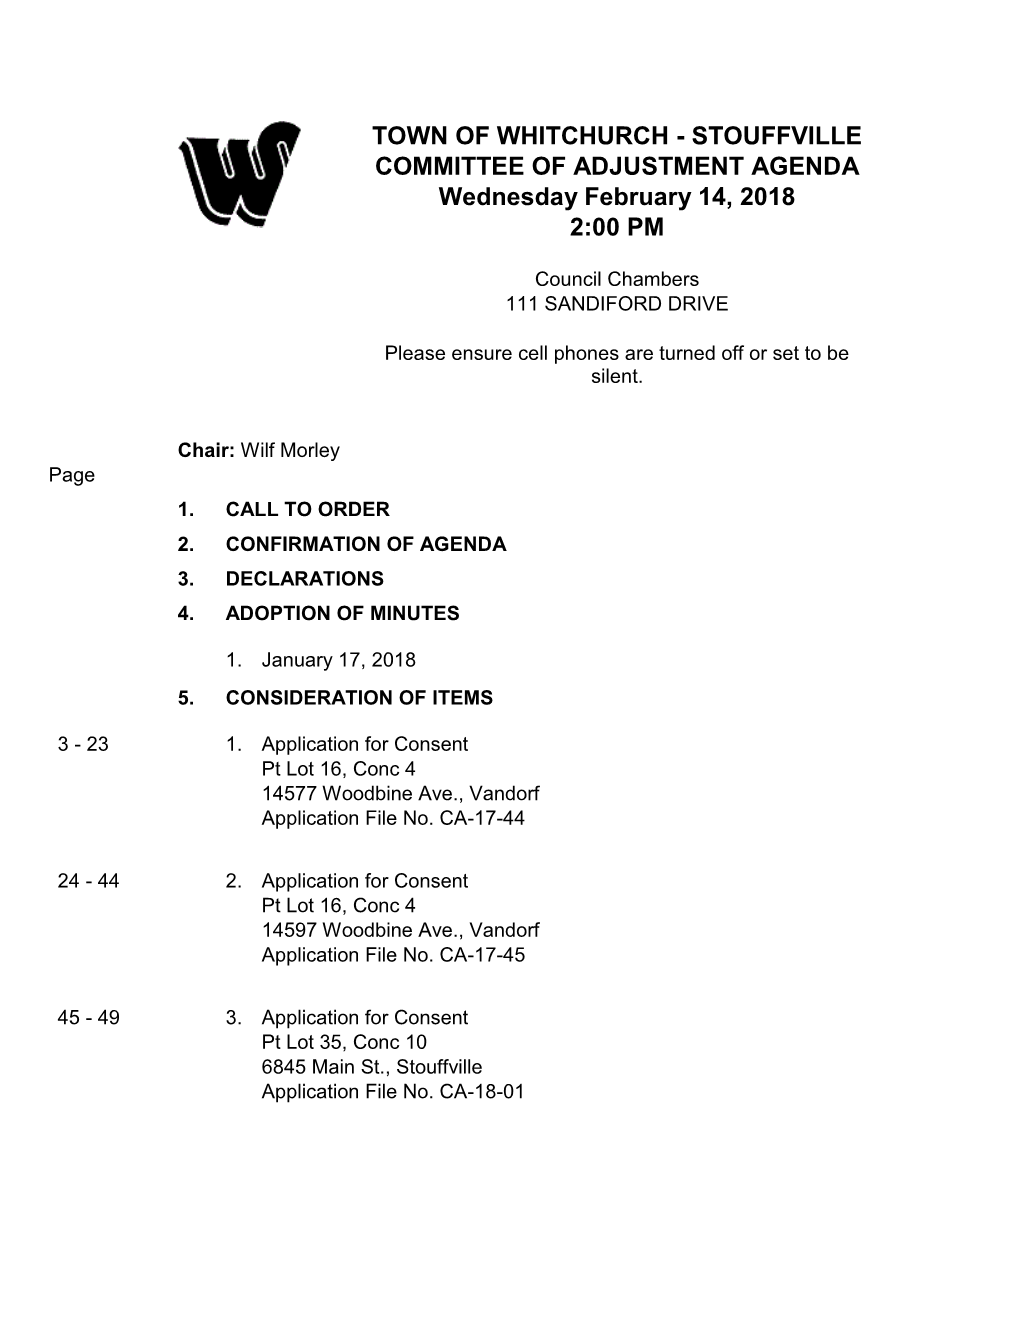 COMMITTEE of ADJUSTMENT AGENDA Wednesday February 14, 2018 2:00 PM